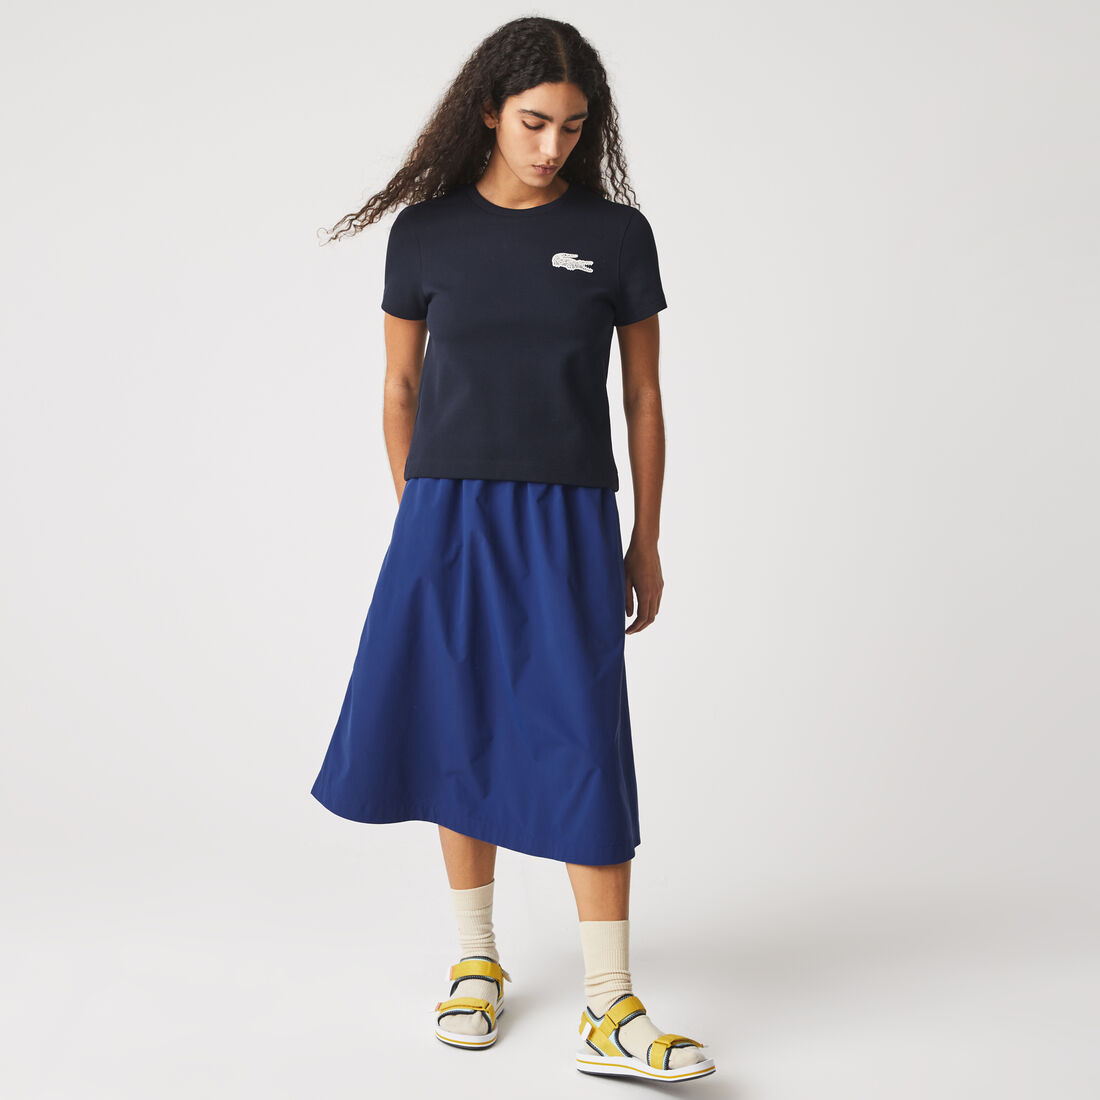 Lacoste Made In France Baumwoll Blend T-shirts Damen Blau | EVHP-25609